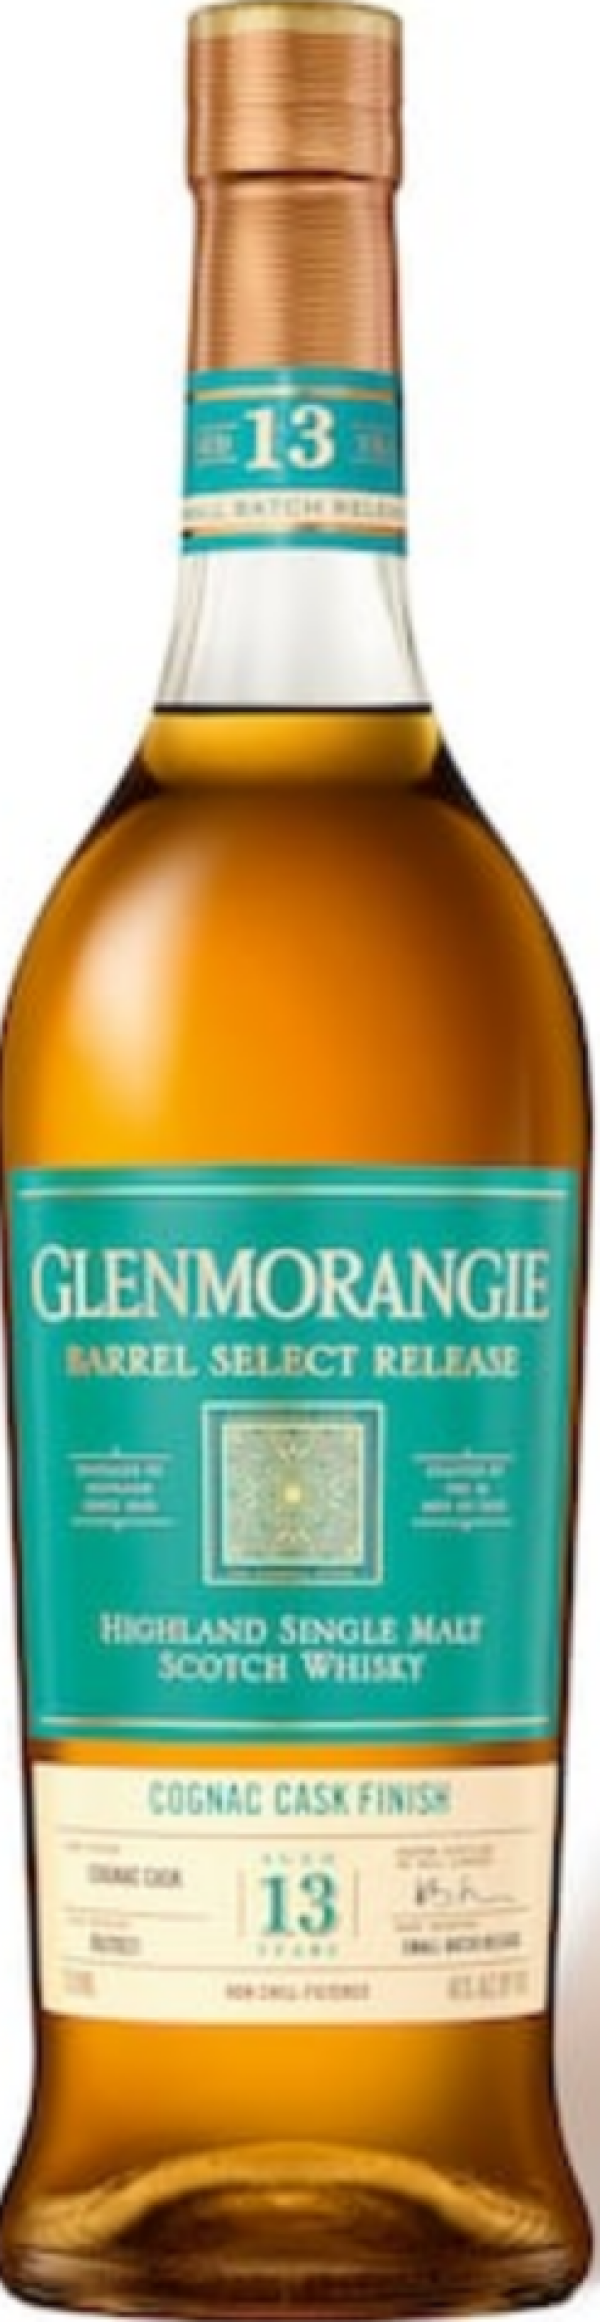 Glenmorangie Cognac Cask Finish, 13 Y,  700 mL 46% alc/vol. | SZENEDRINKS